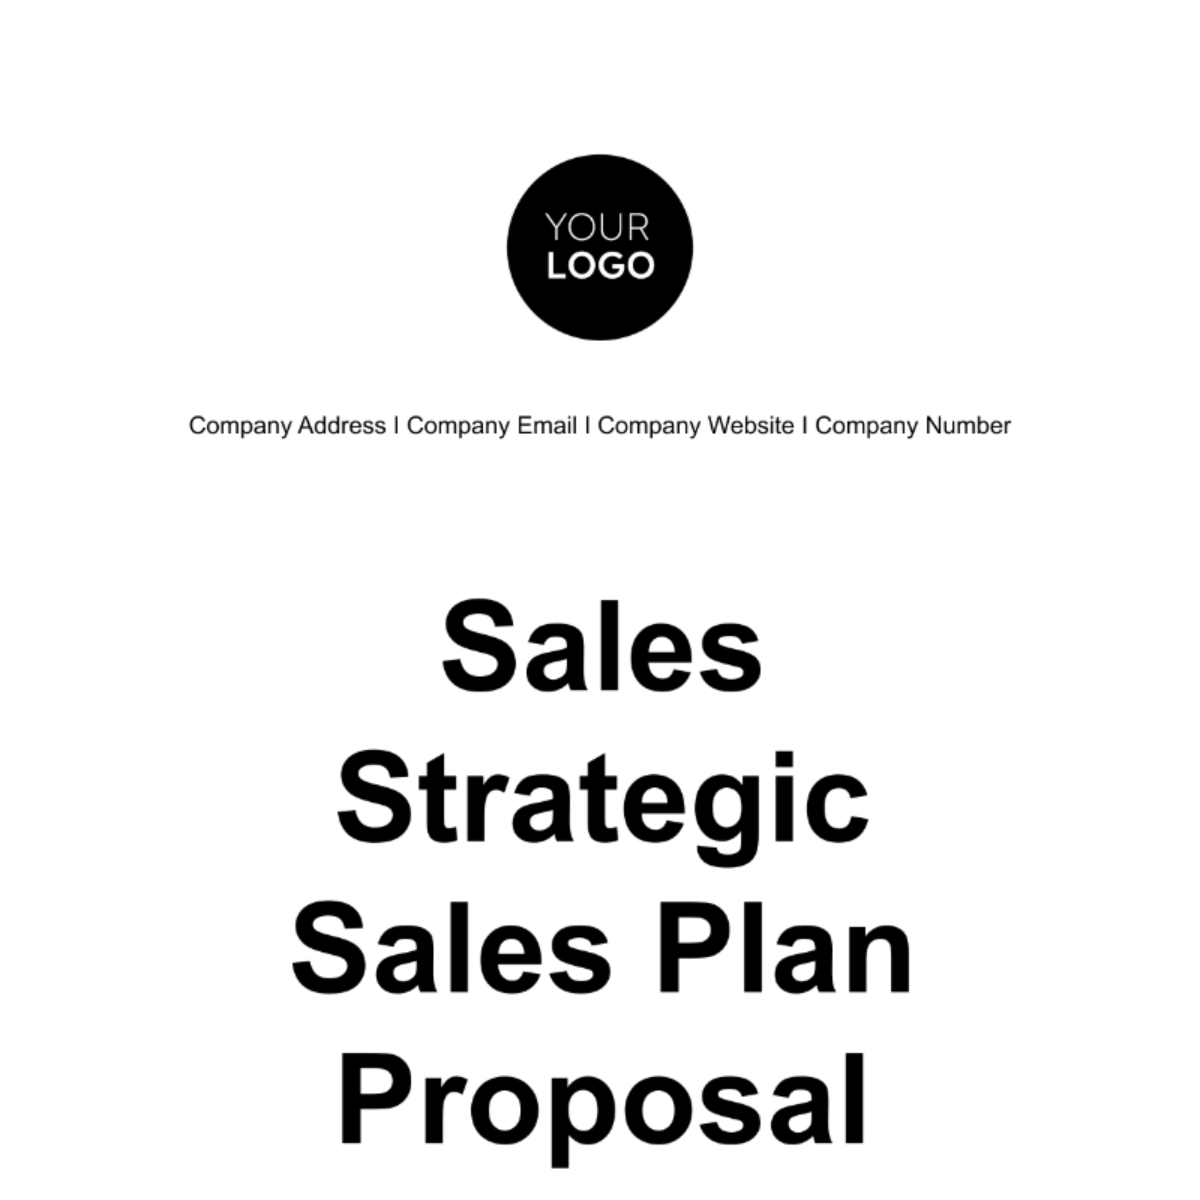 Free Sales Strategic Sales Plan Proposal Template